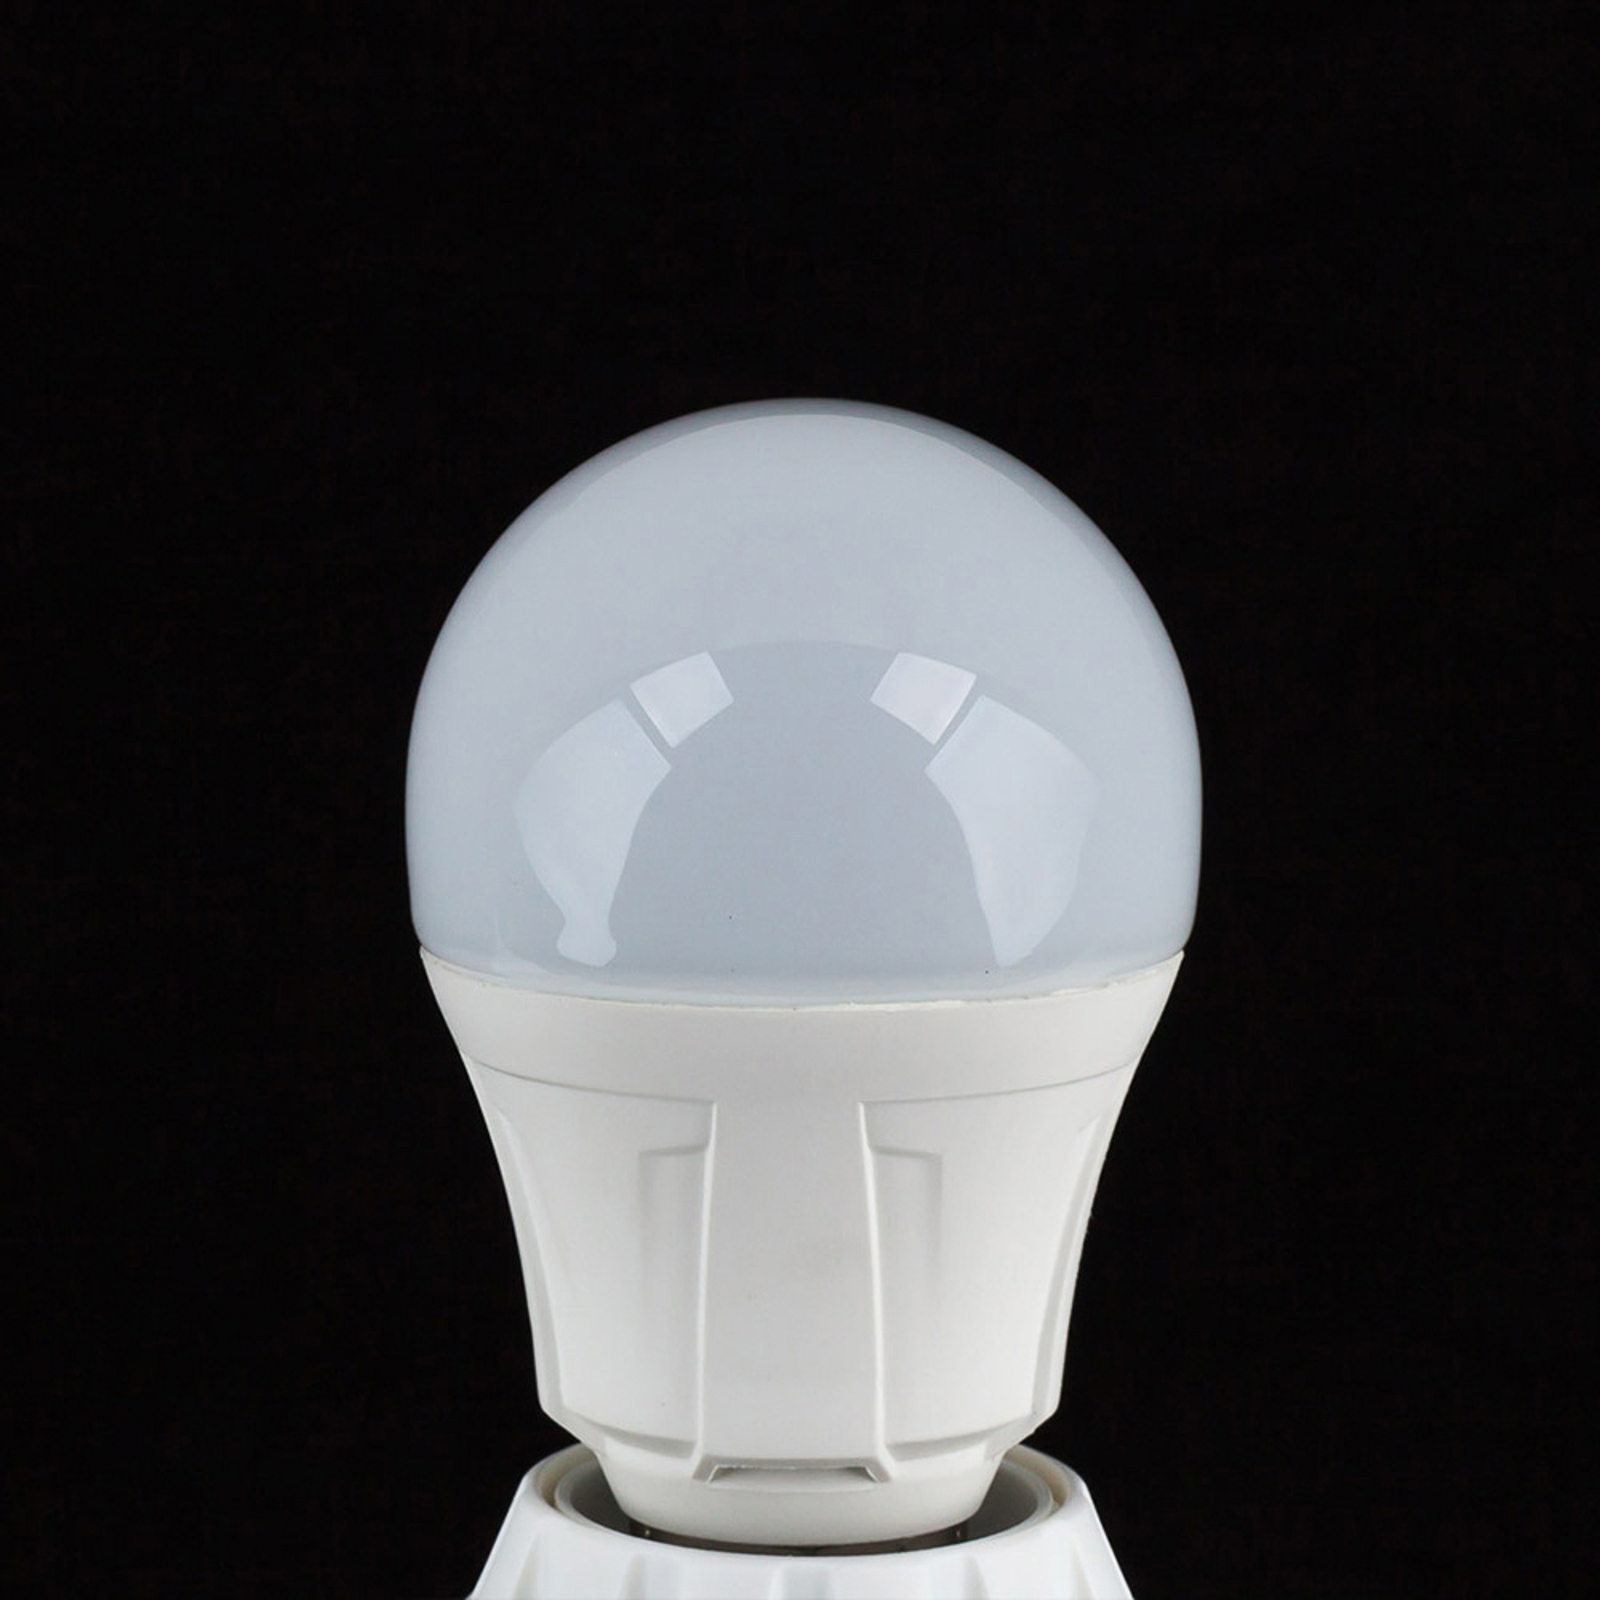 LED bulb traditional shape E27 11 W 830 6-pack